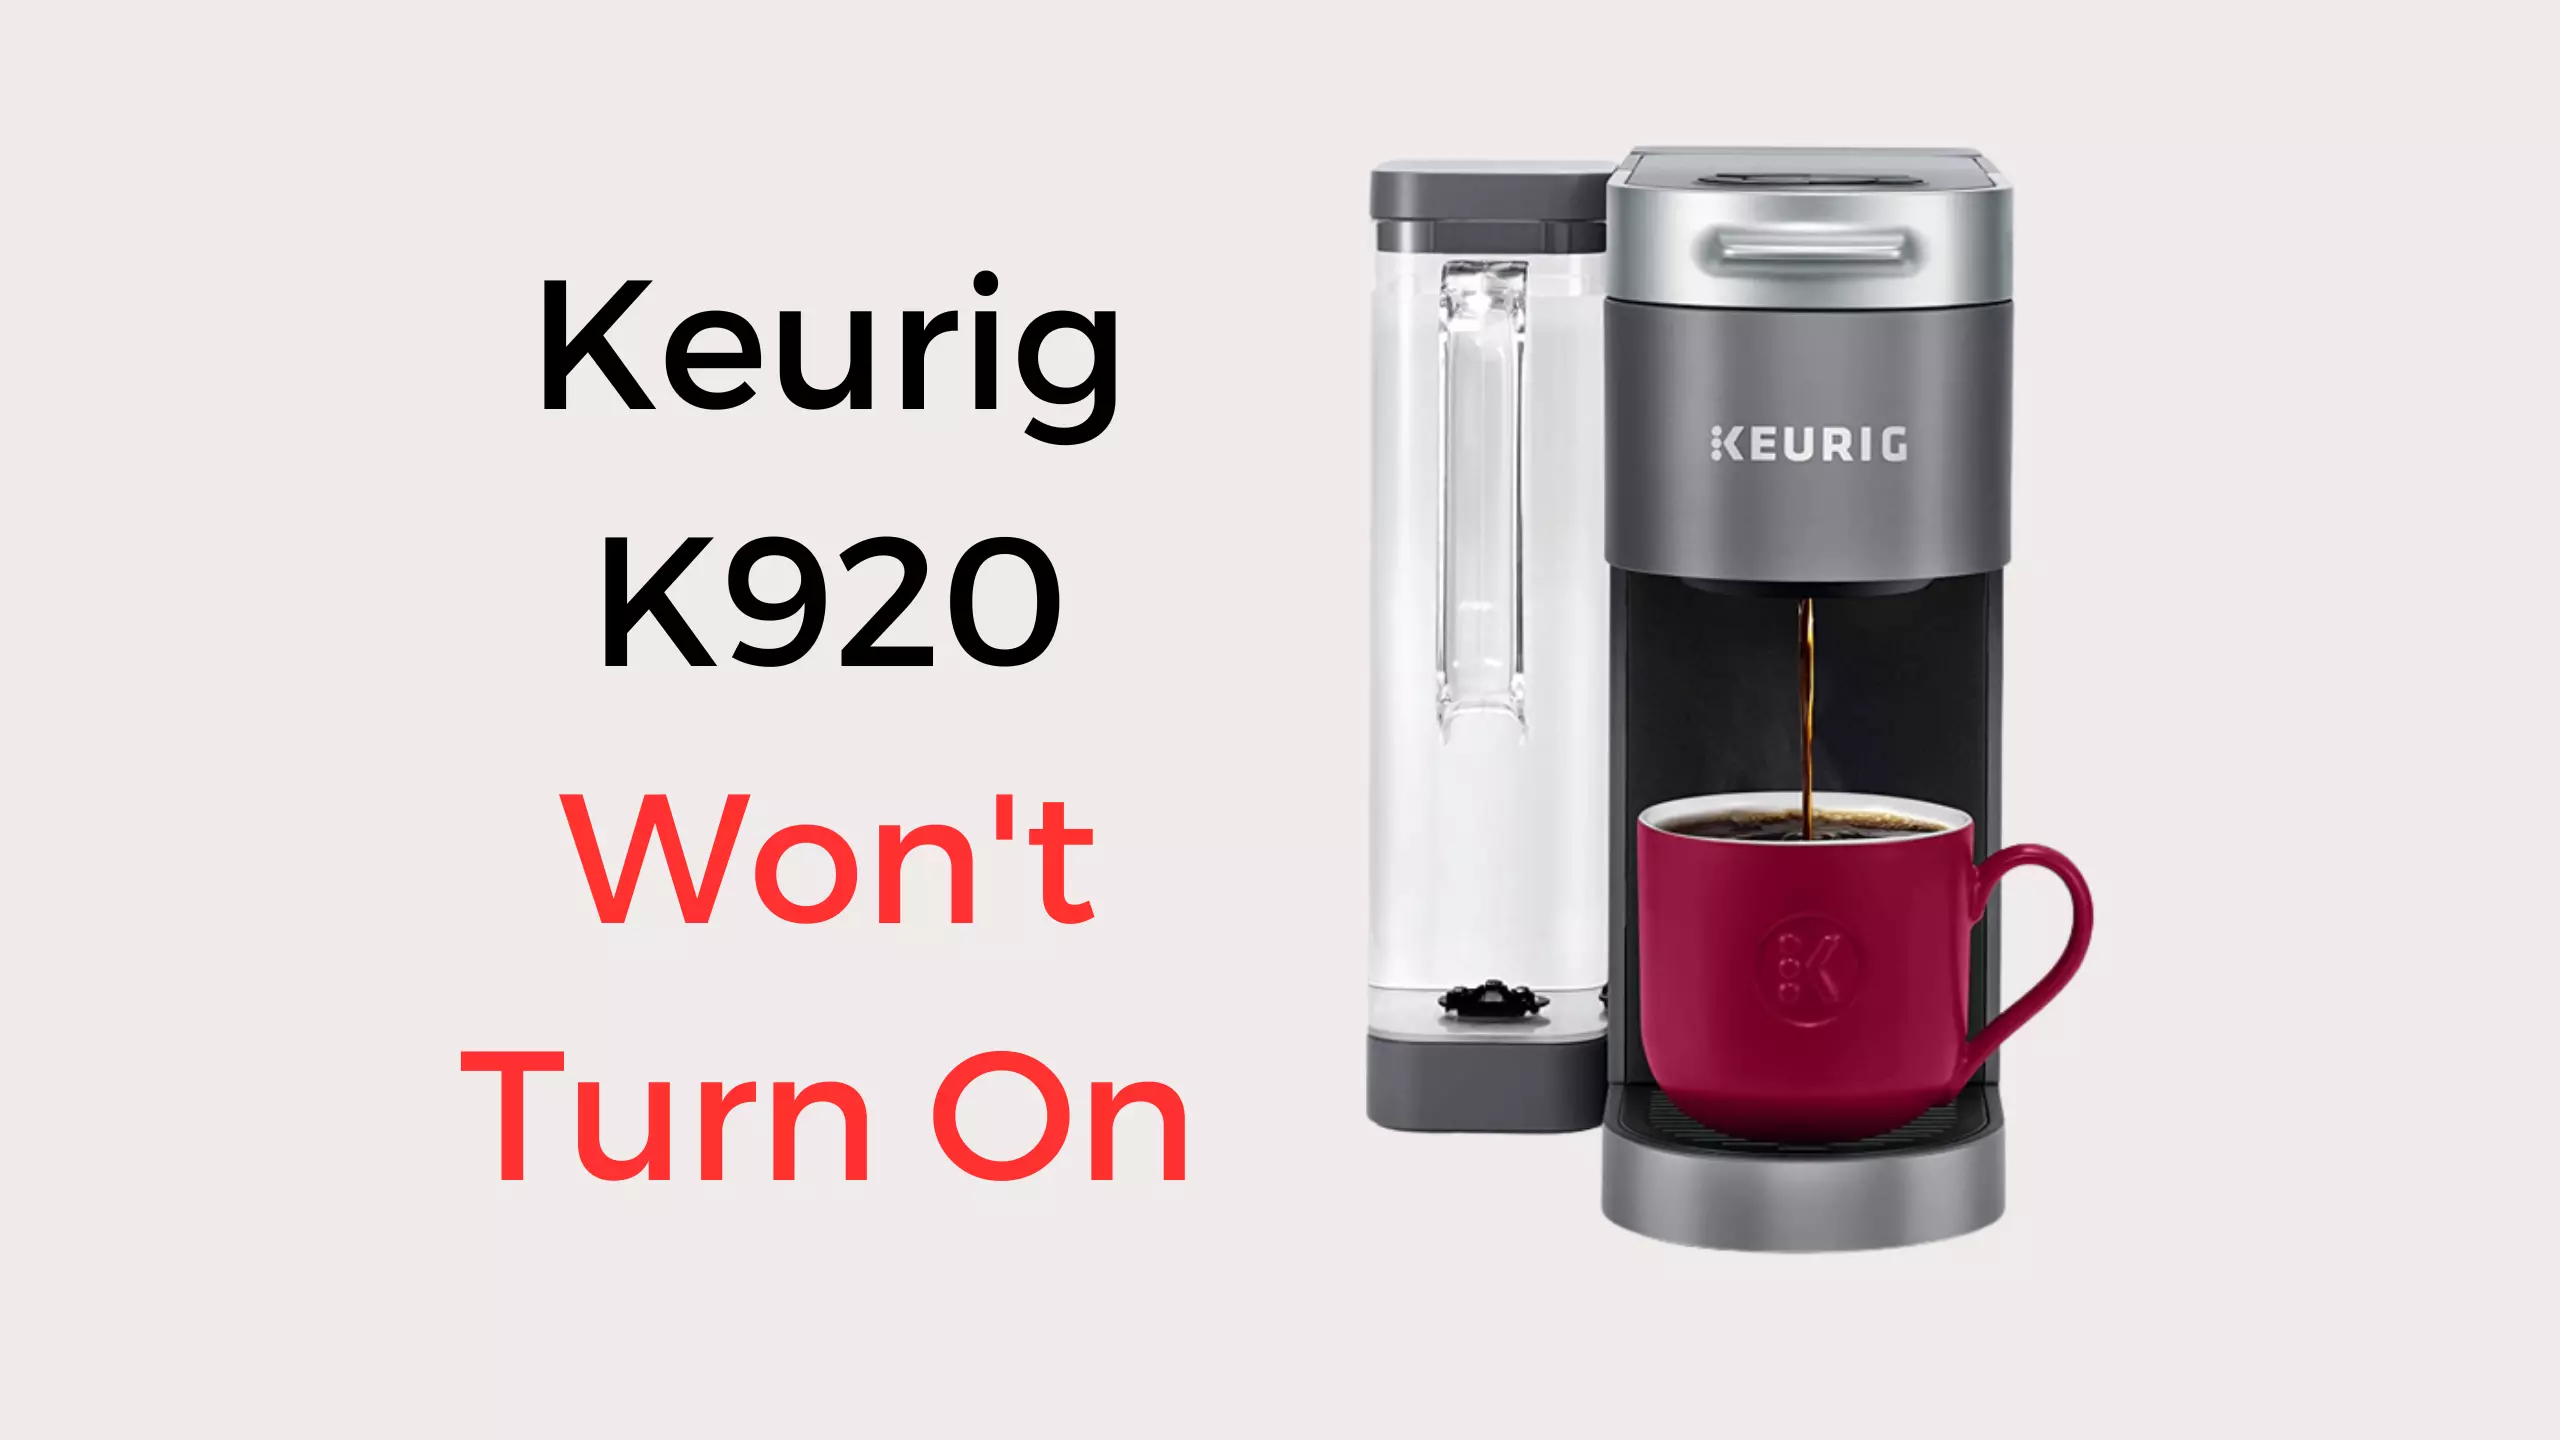 keurig k920 won't turn on